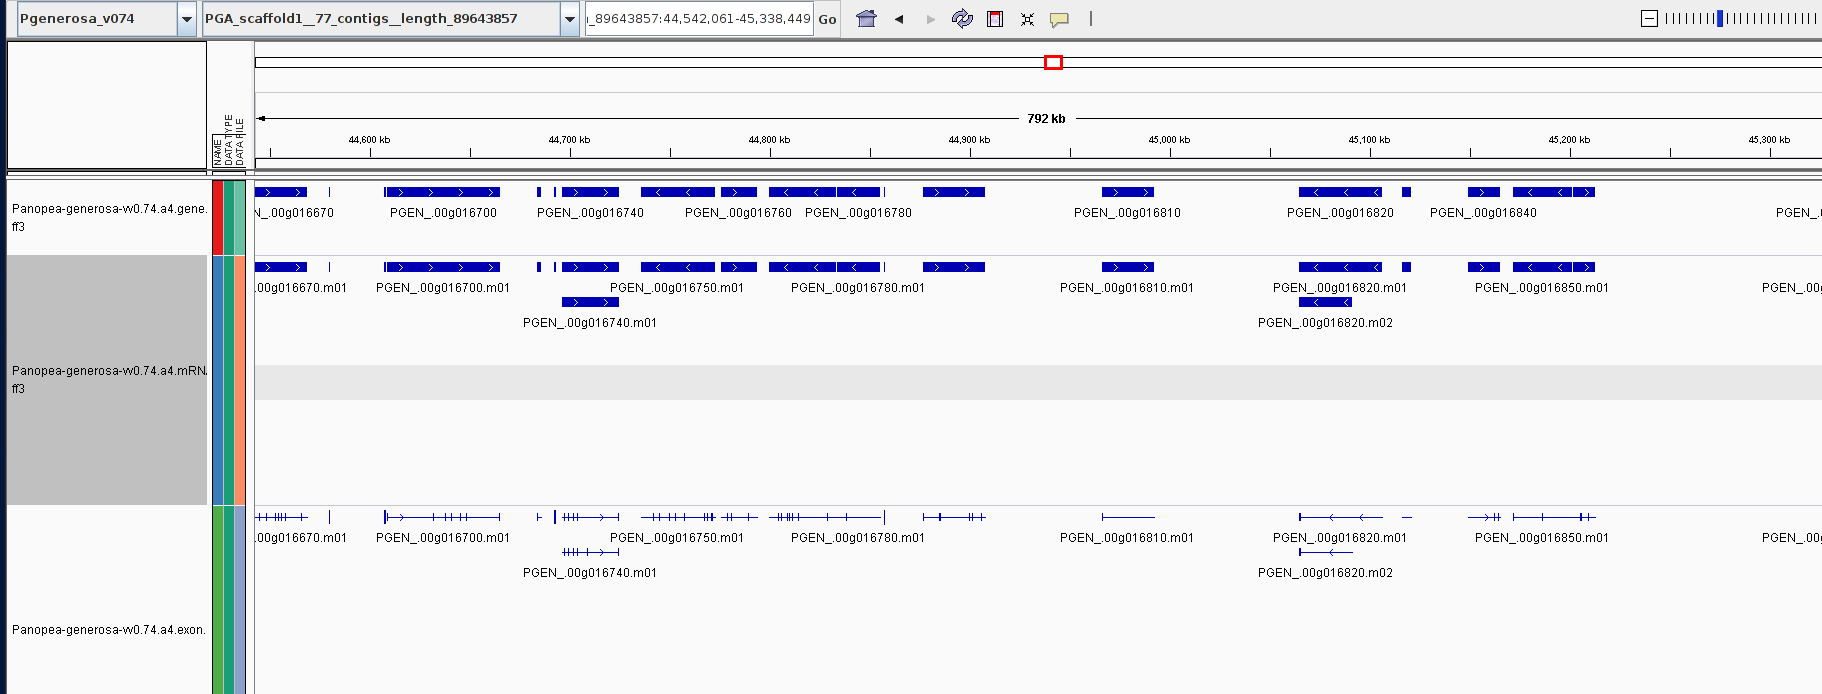 IGV screencap showing mRNA alternative isoforms for some genes